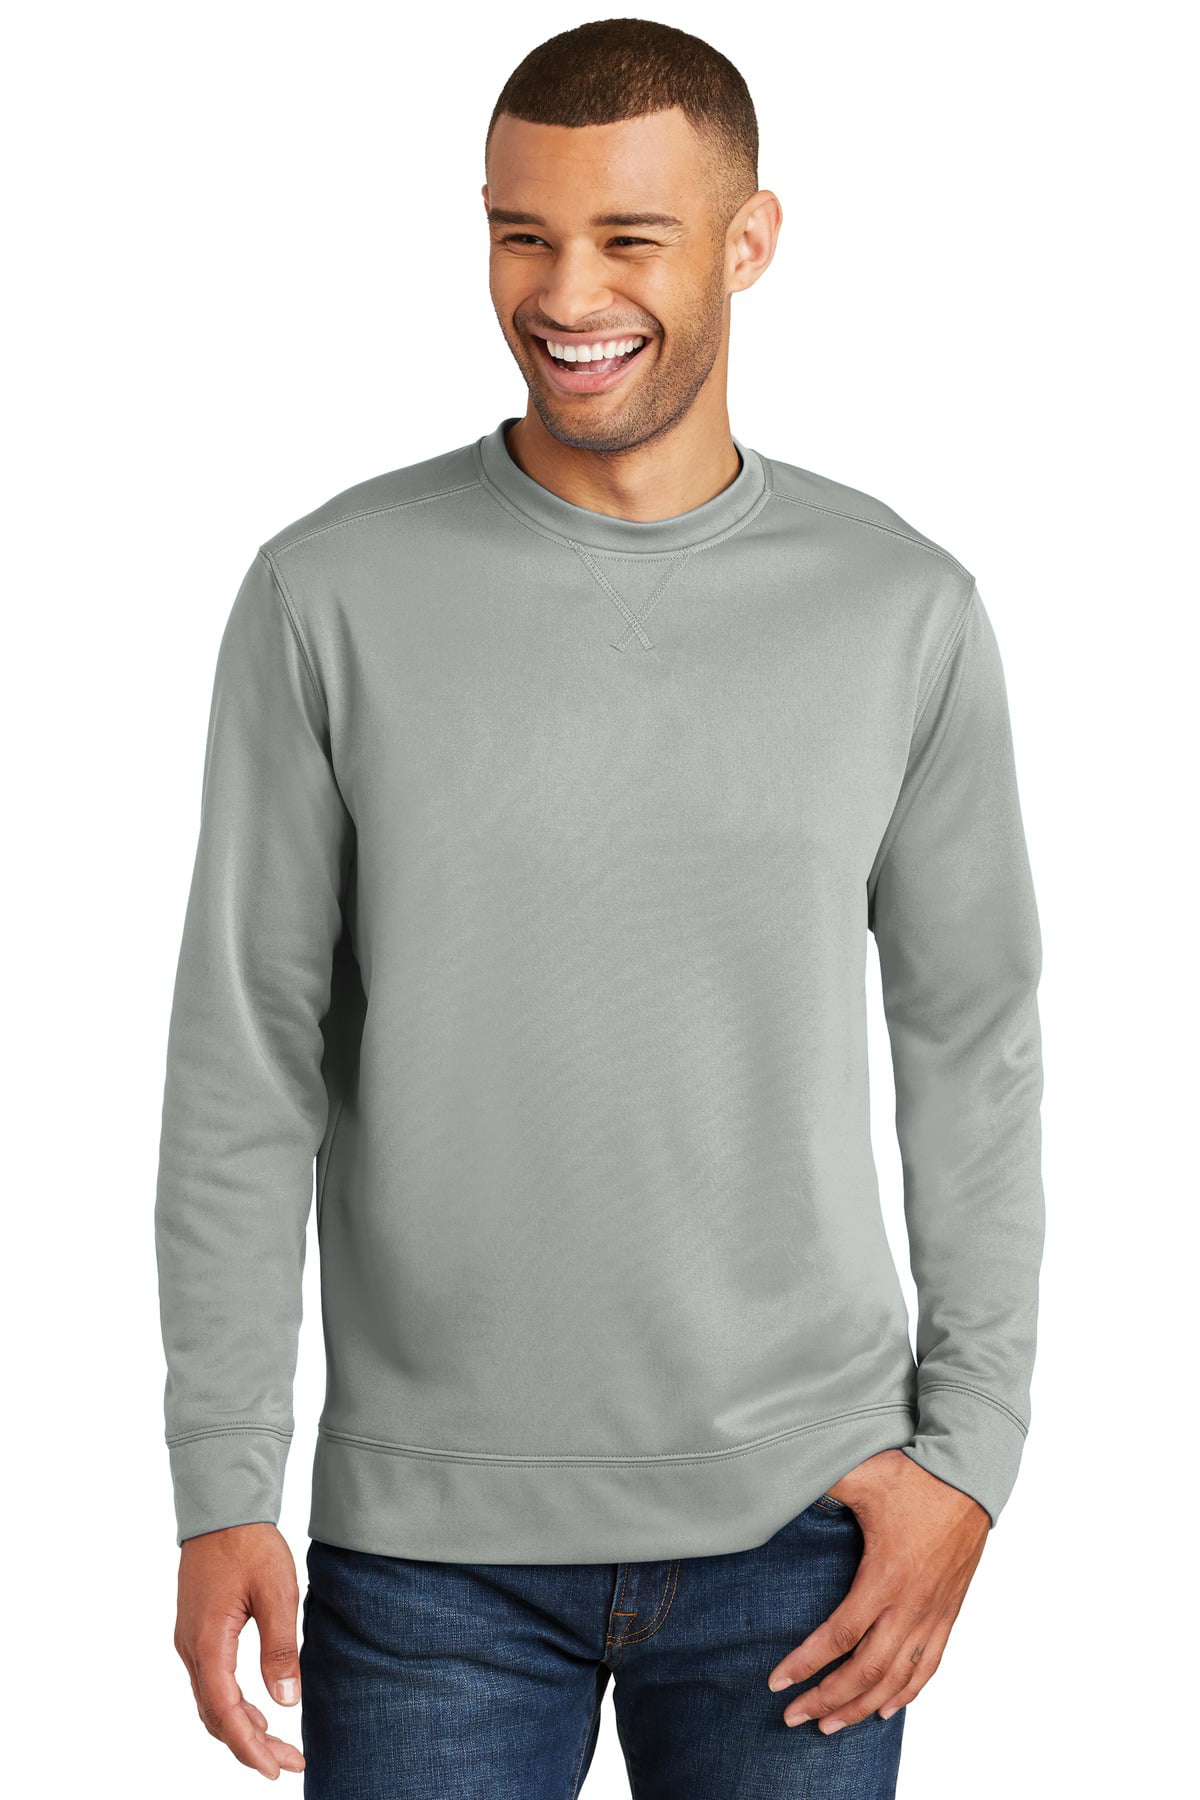 Port & Company Mens Performance Fleece Crewneck Sweatshirt PC590